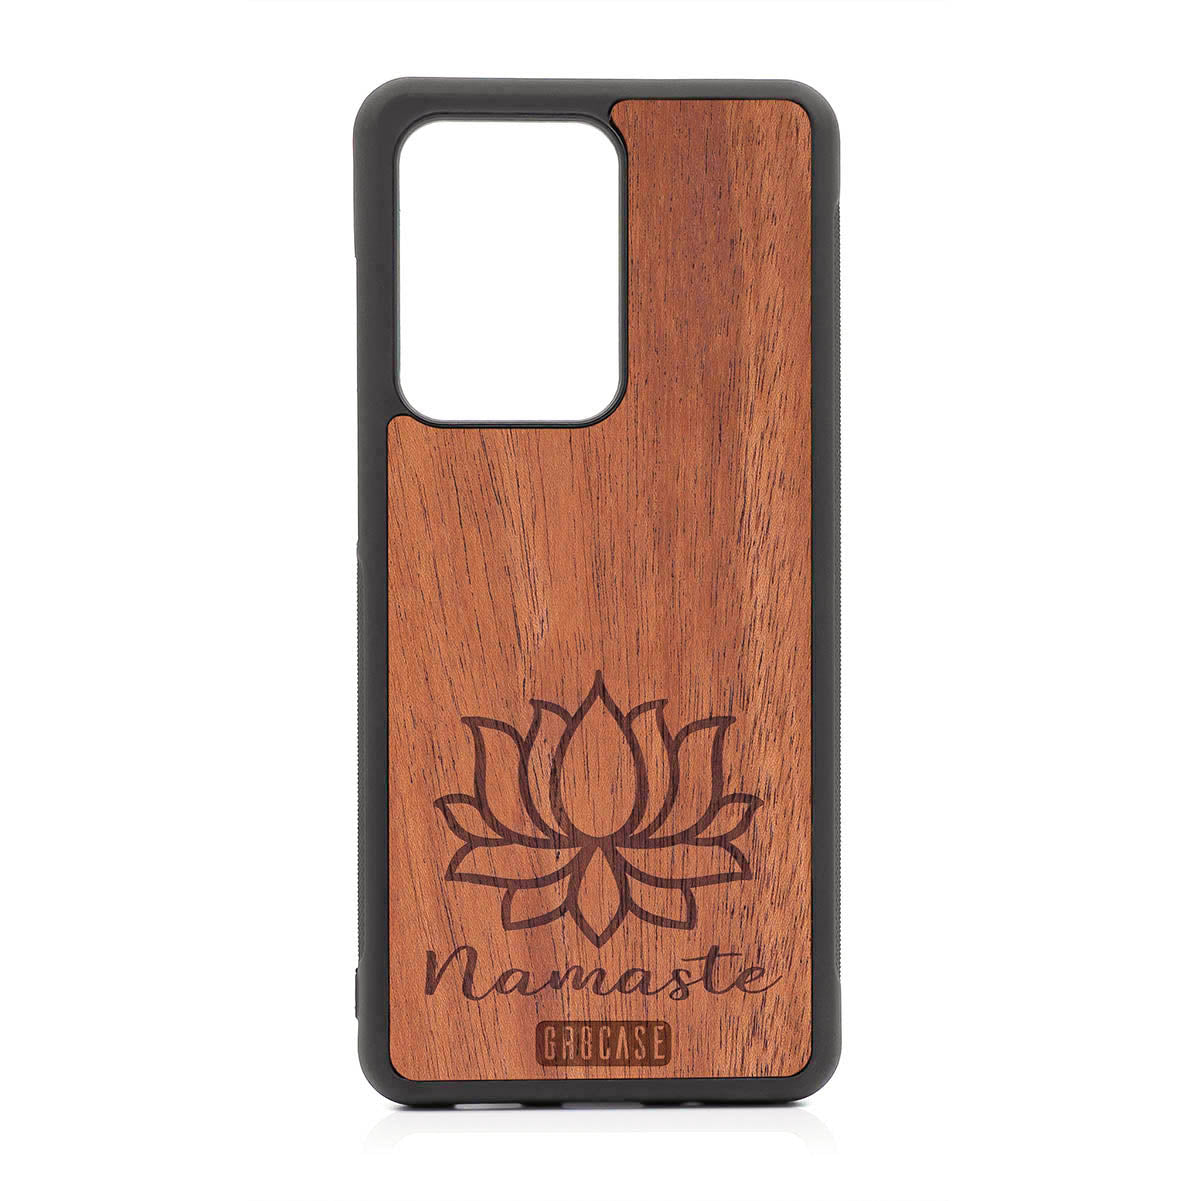 Namaste (Lotus Flower) Design Wood Case For Samsung Galaxy S20 Ultra